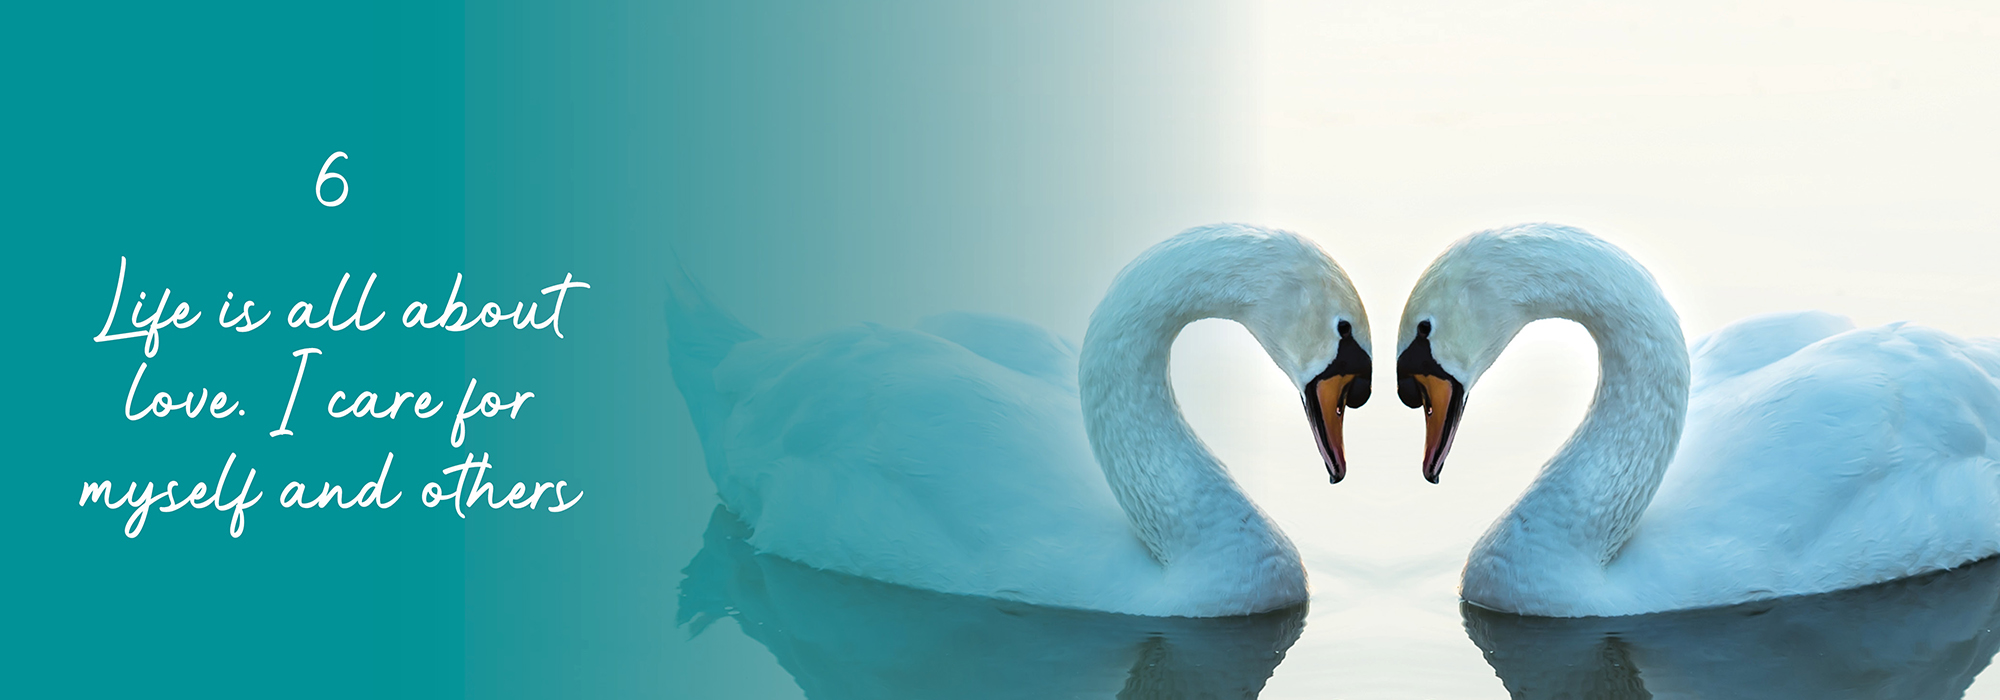 Life Blessing banner swans